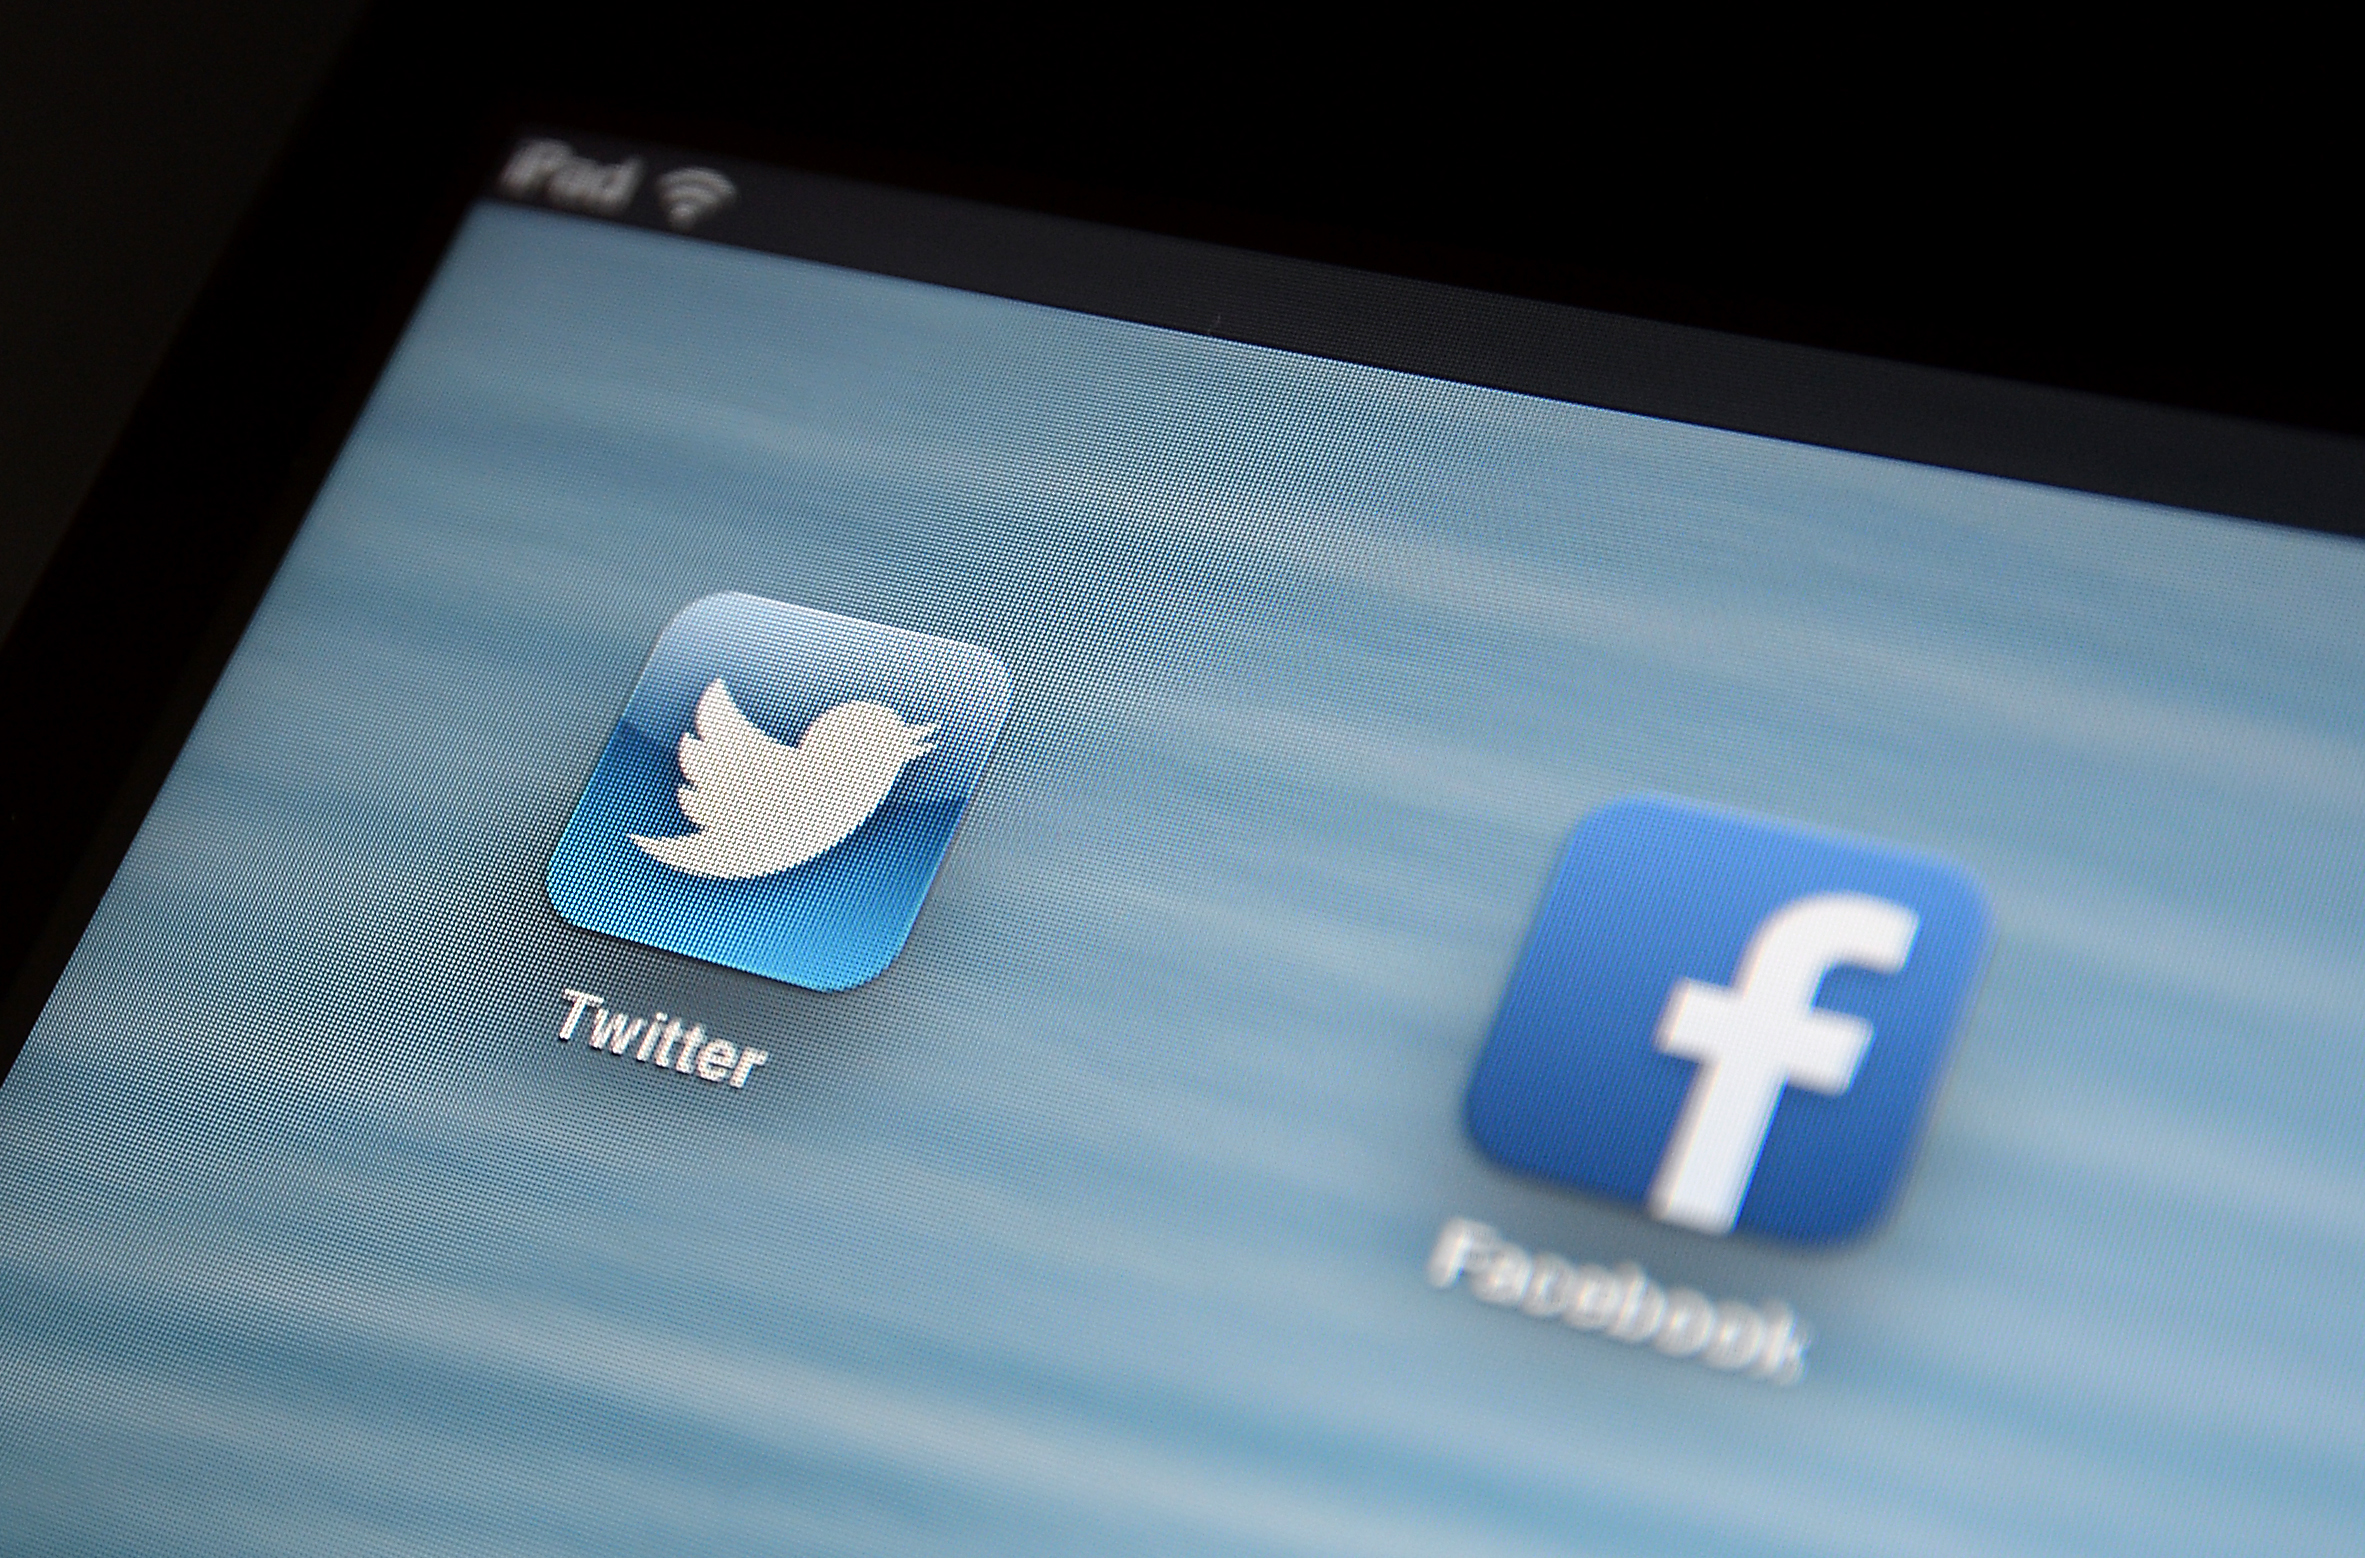 social media apps Twitter and Facebook